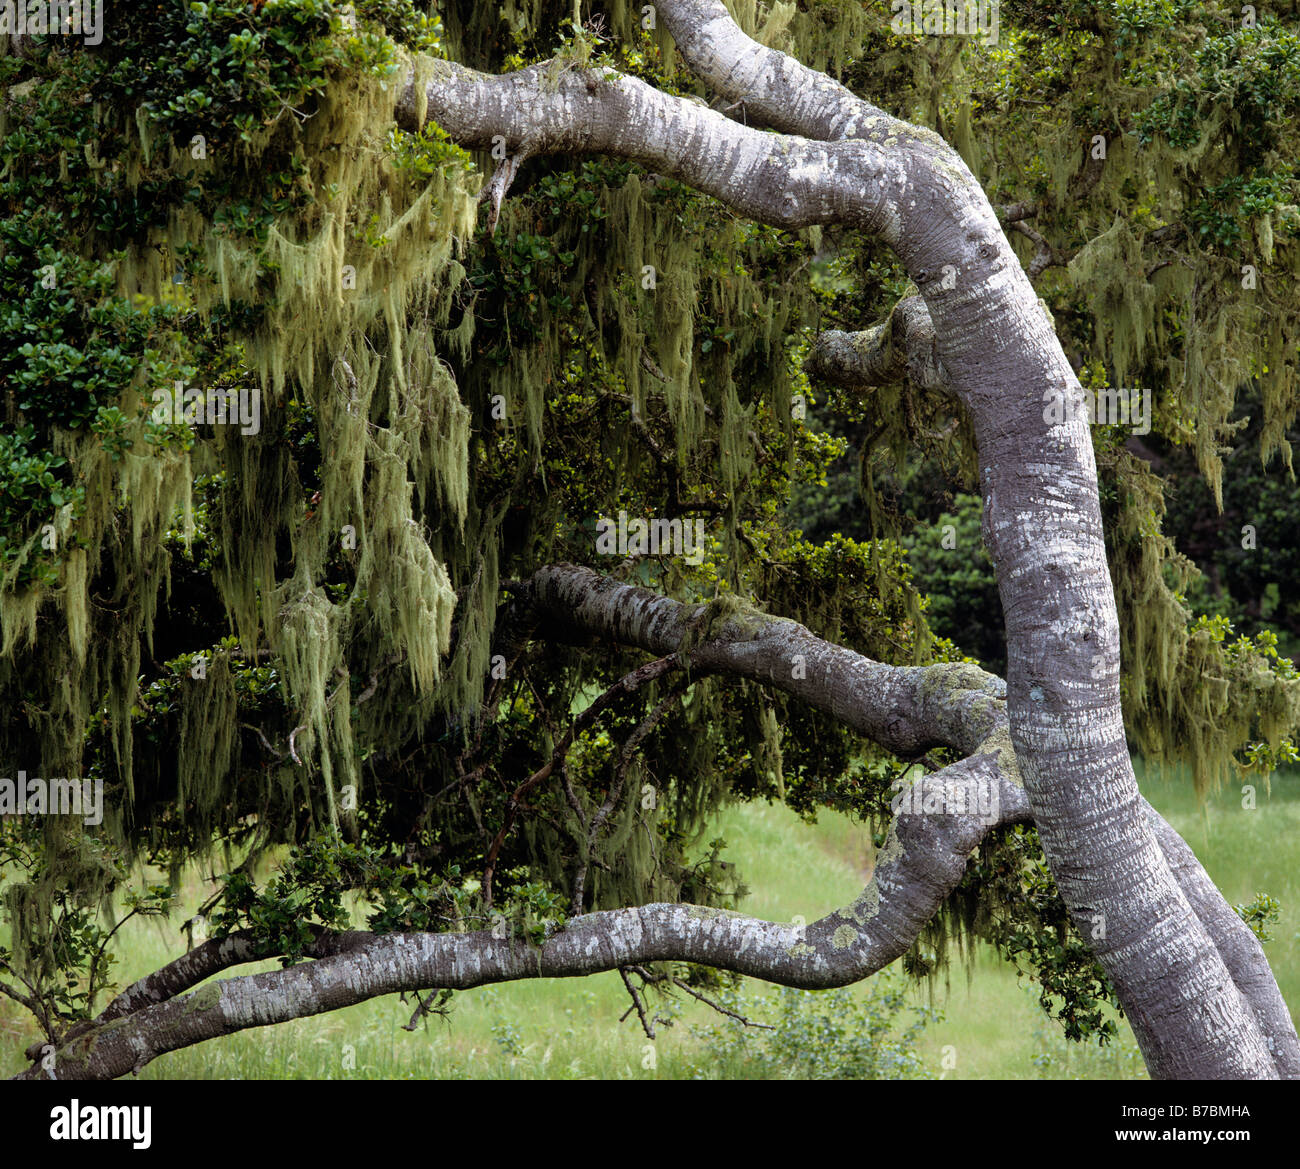 SPANISH MOSS grows on a LIVE OAK TREE in the COASTAL RANGE of CARMEL VALLEY CALIFORNIA Stock Photo